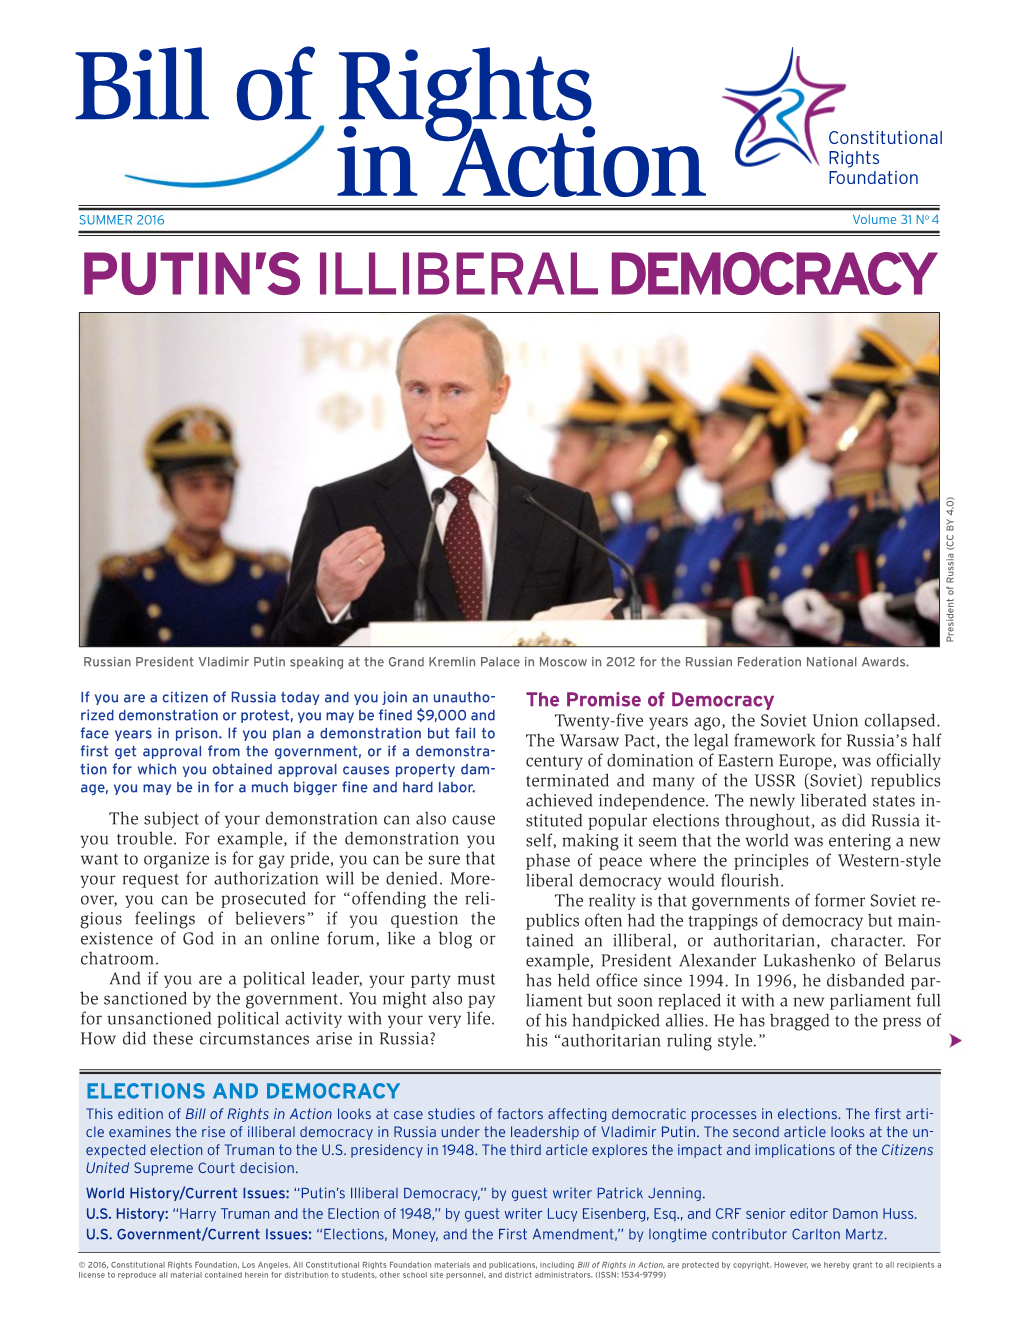 Putin's Illiberal Democracy